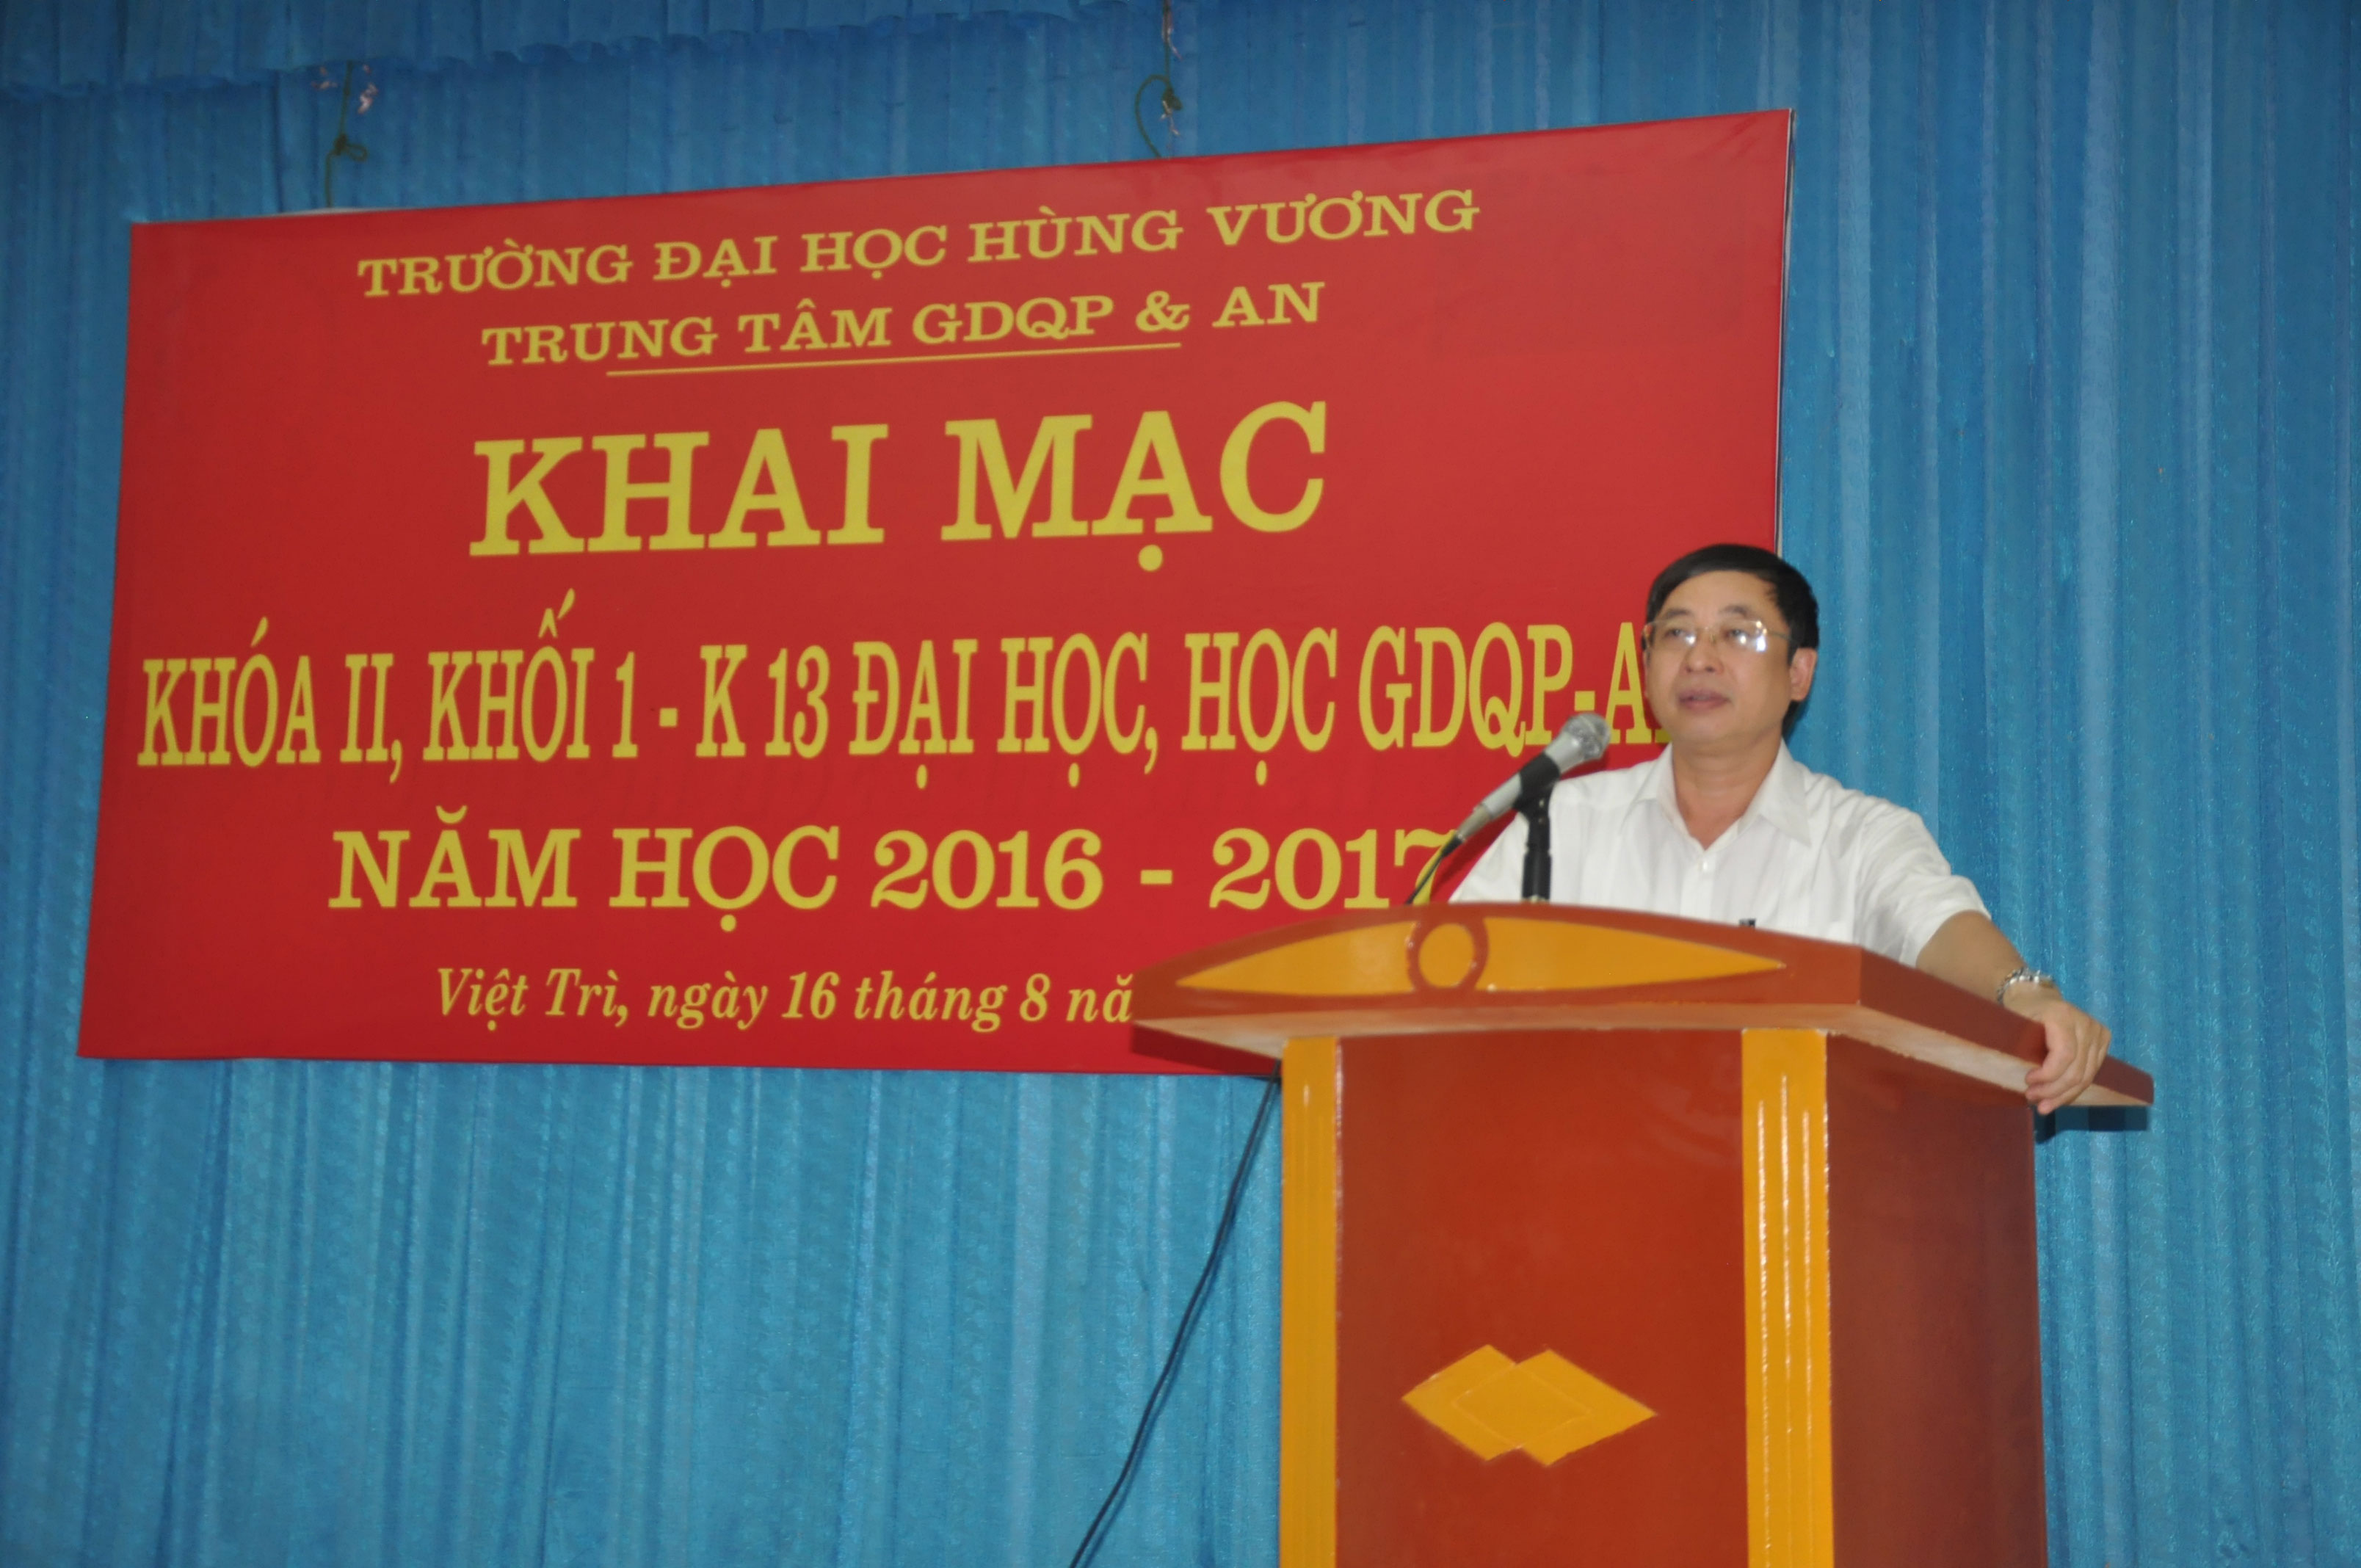 Truong Dai hoc Hung Vuong to chuc khai mac Khoa II, Khoi 1 Giao duc quoc phong va an ninh - K13 dai hoc su pham nam hoc 2016-2017